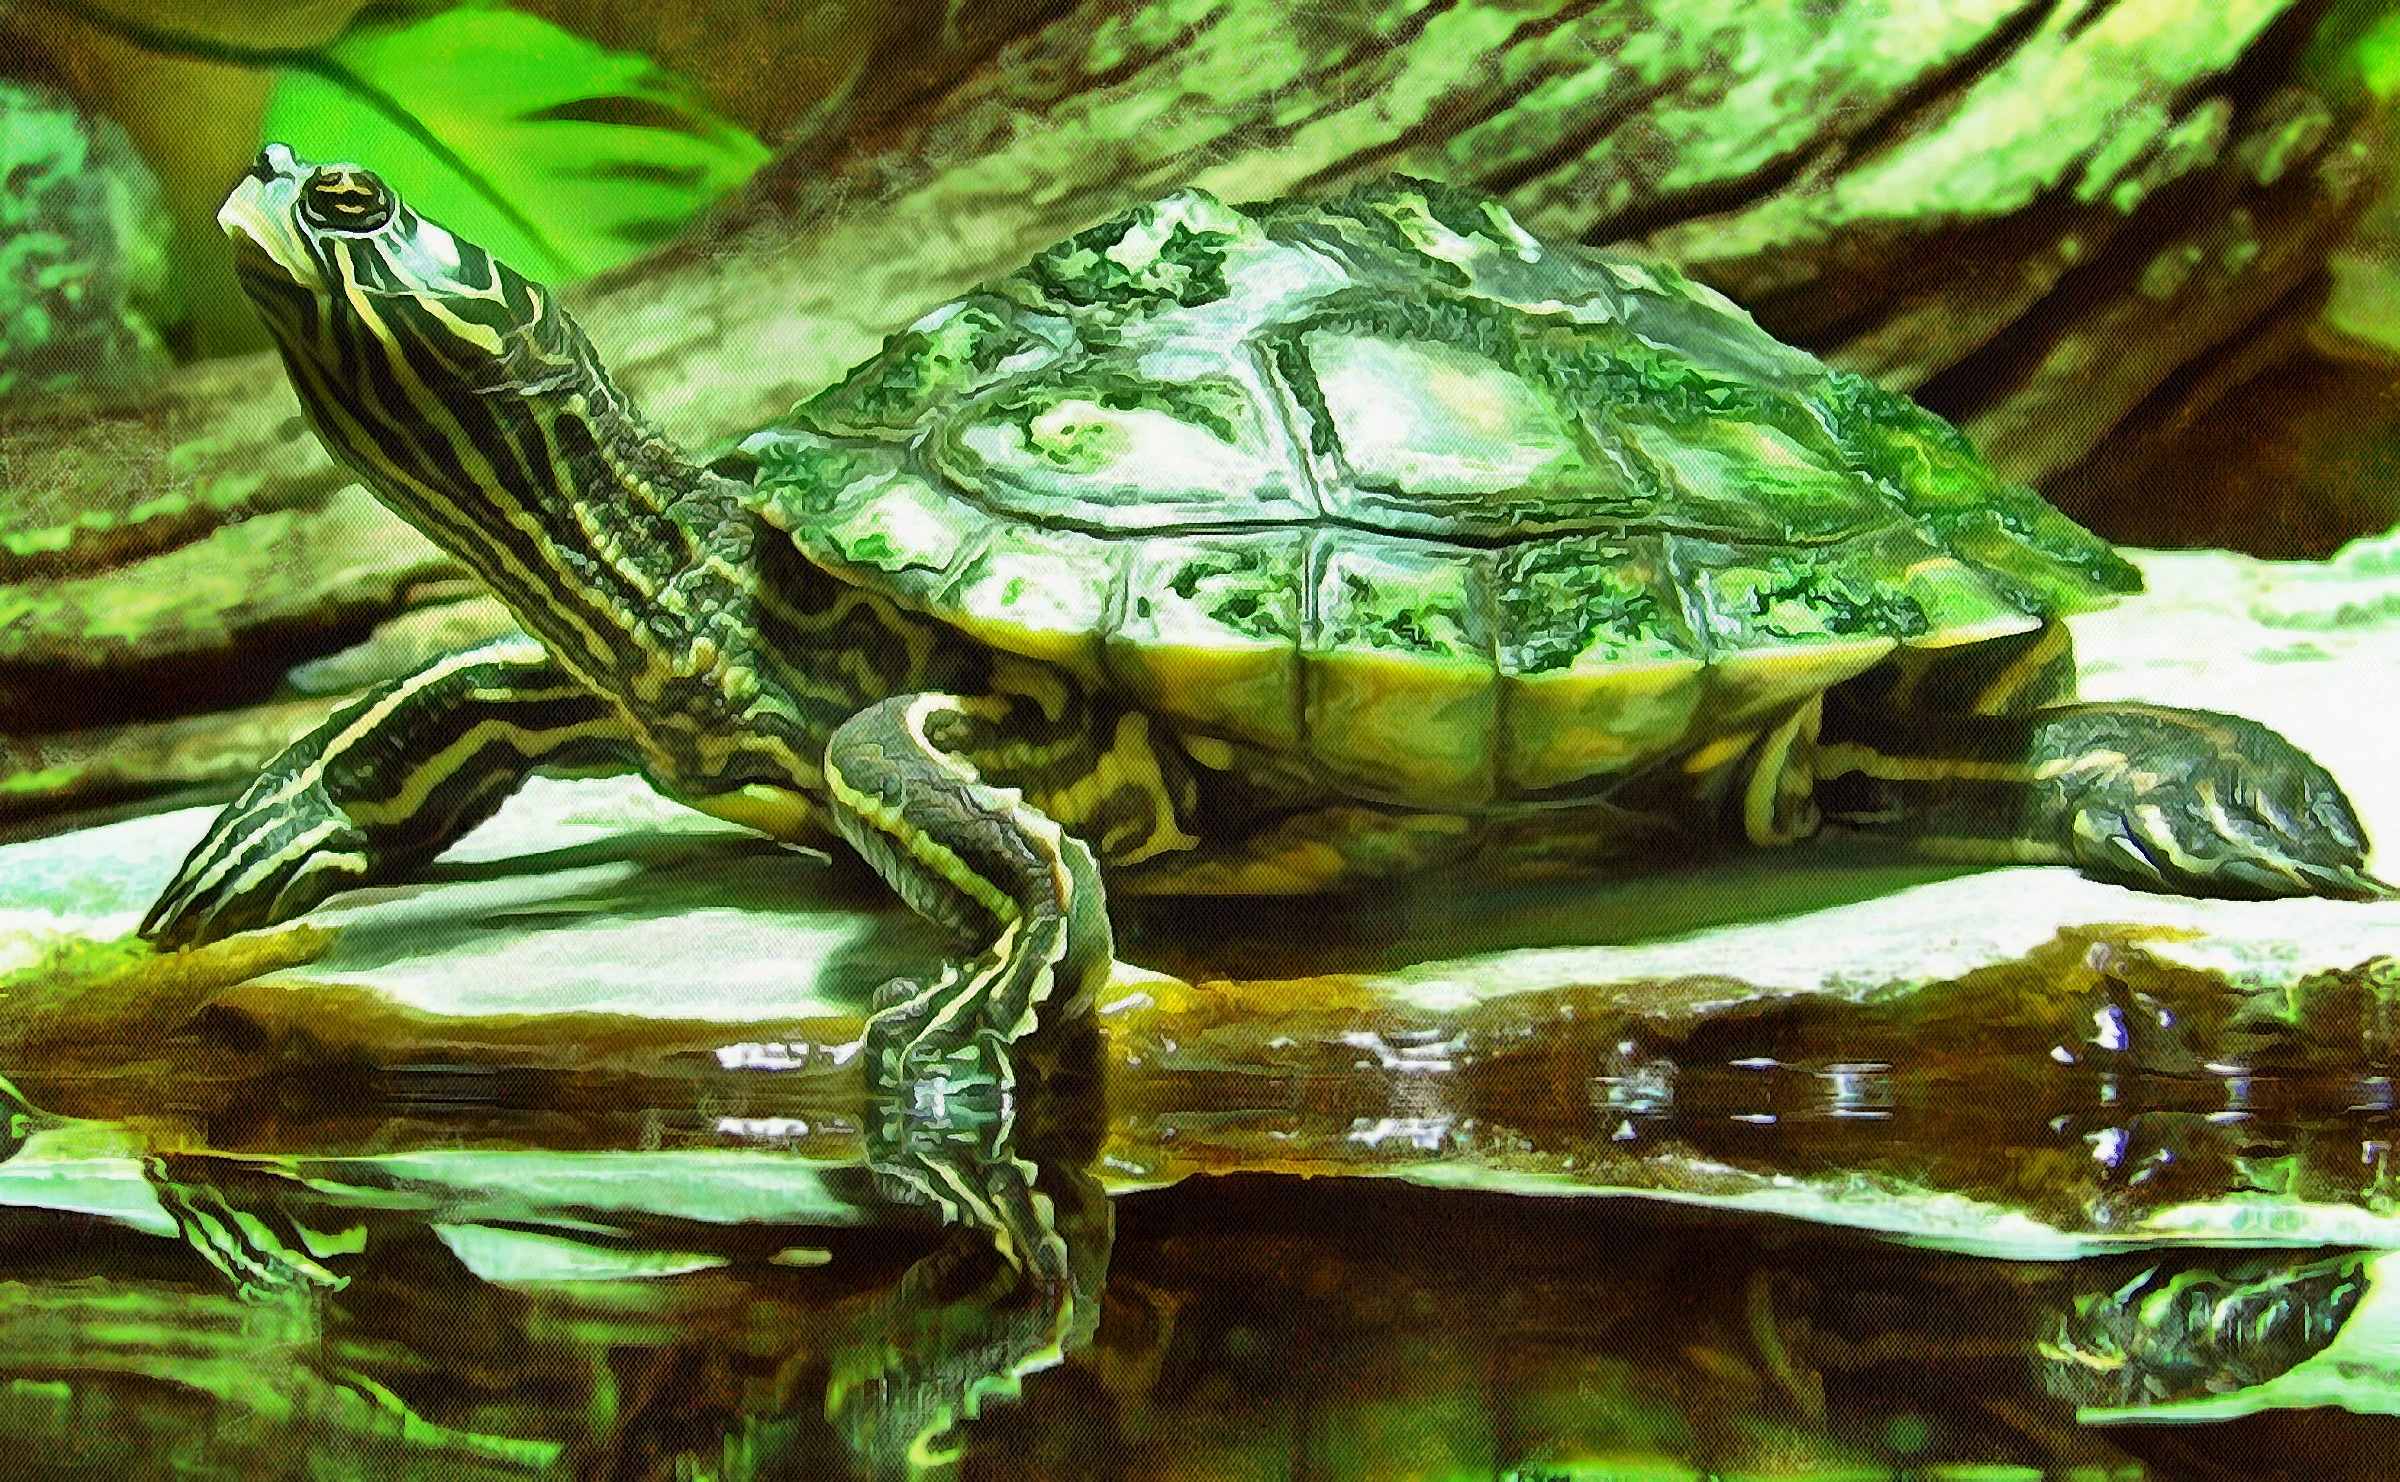 Turtle, Tortoise, Turtle free images,  – Tortoise free images, Tortoise free , Turtle stock free images, free images turtles, tortoise free , tortoise public domain images!